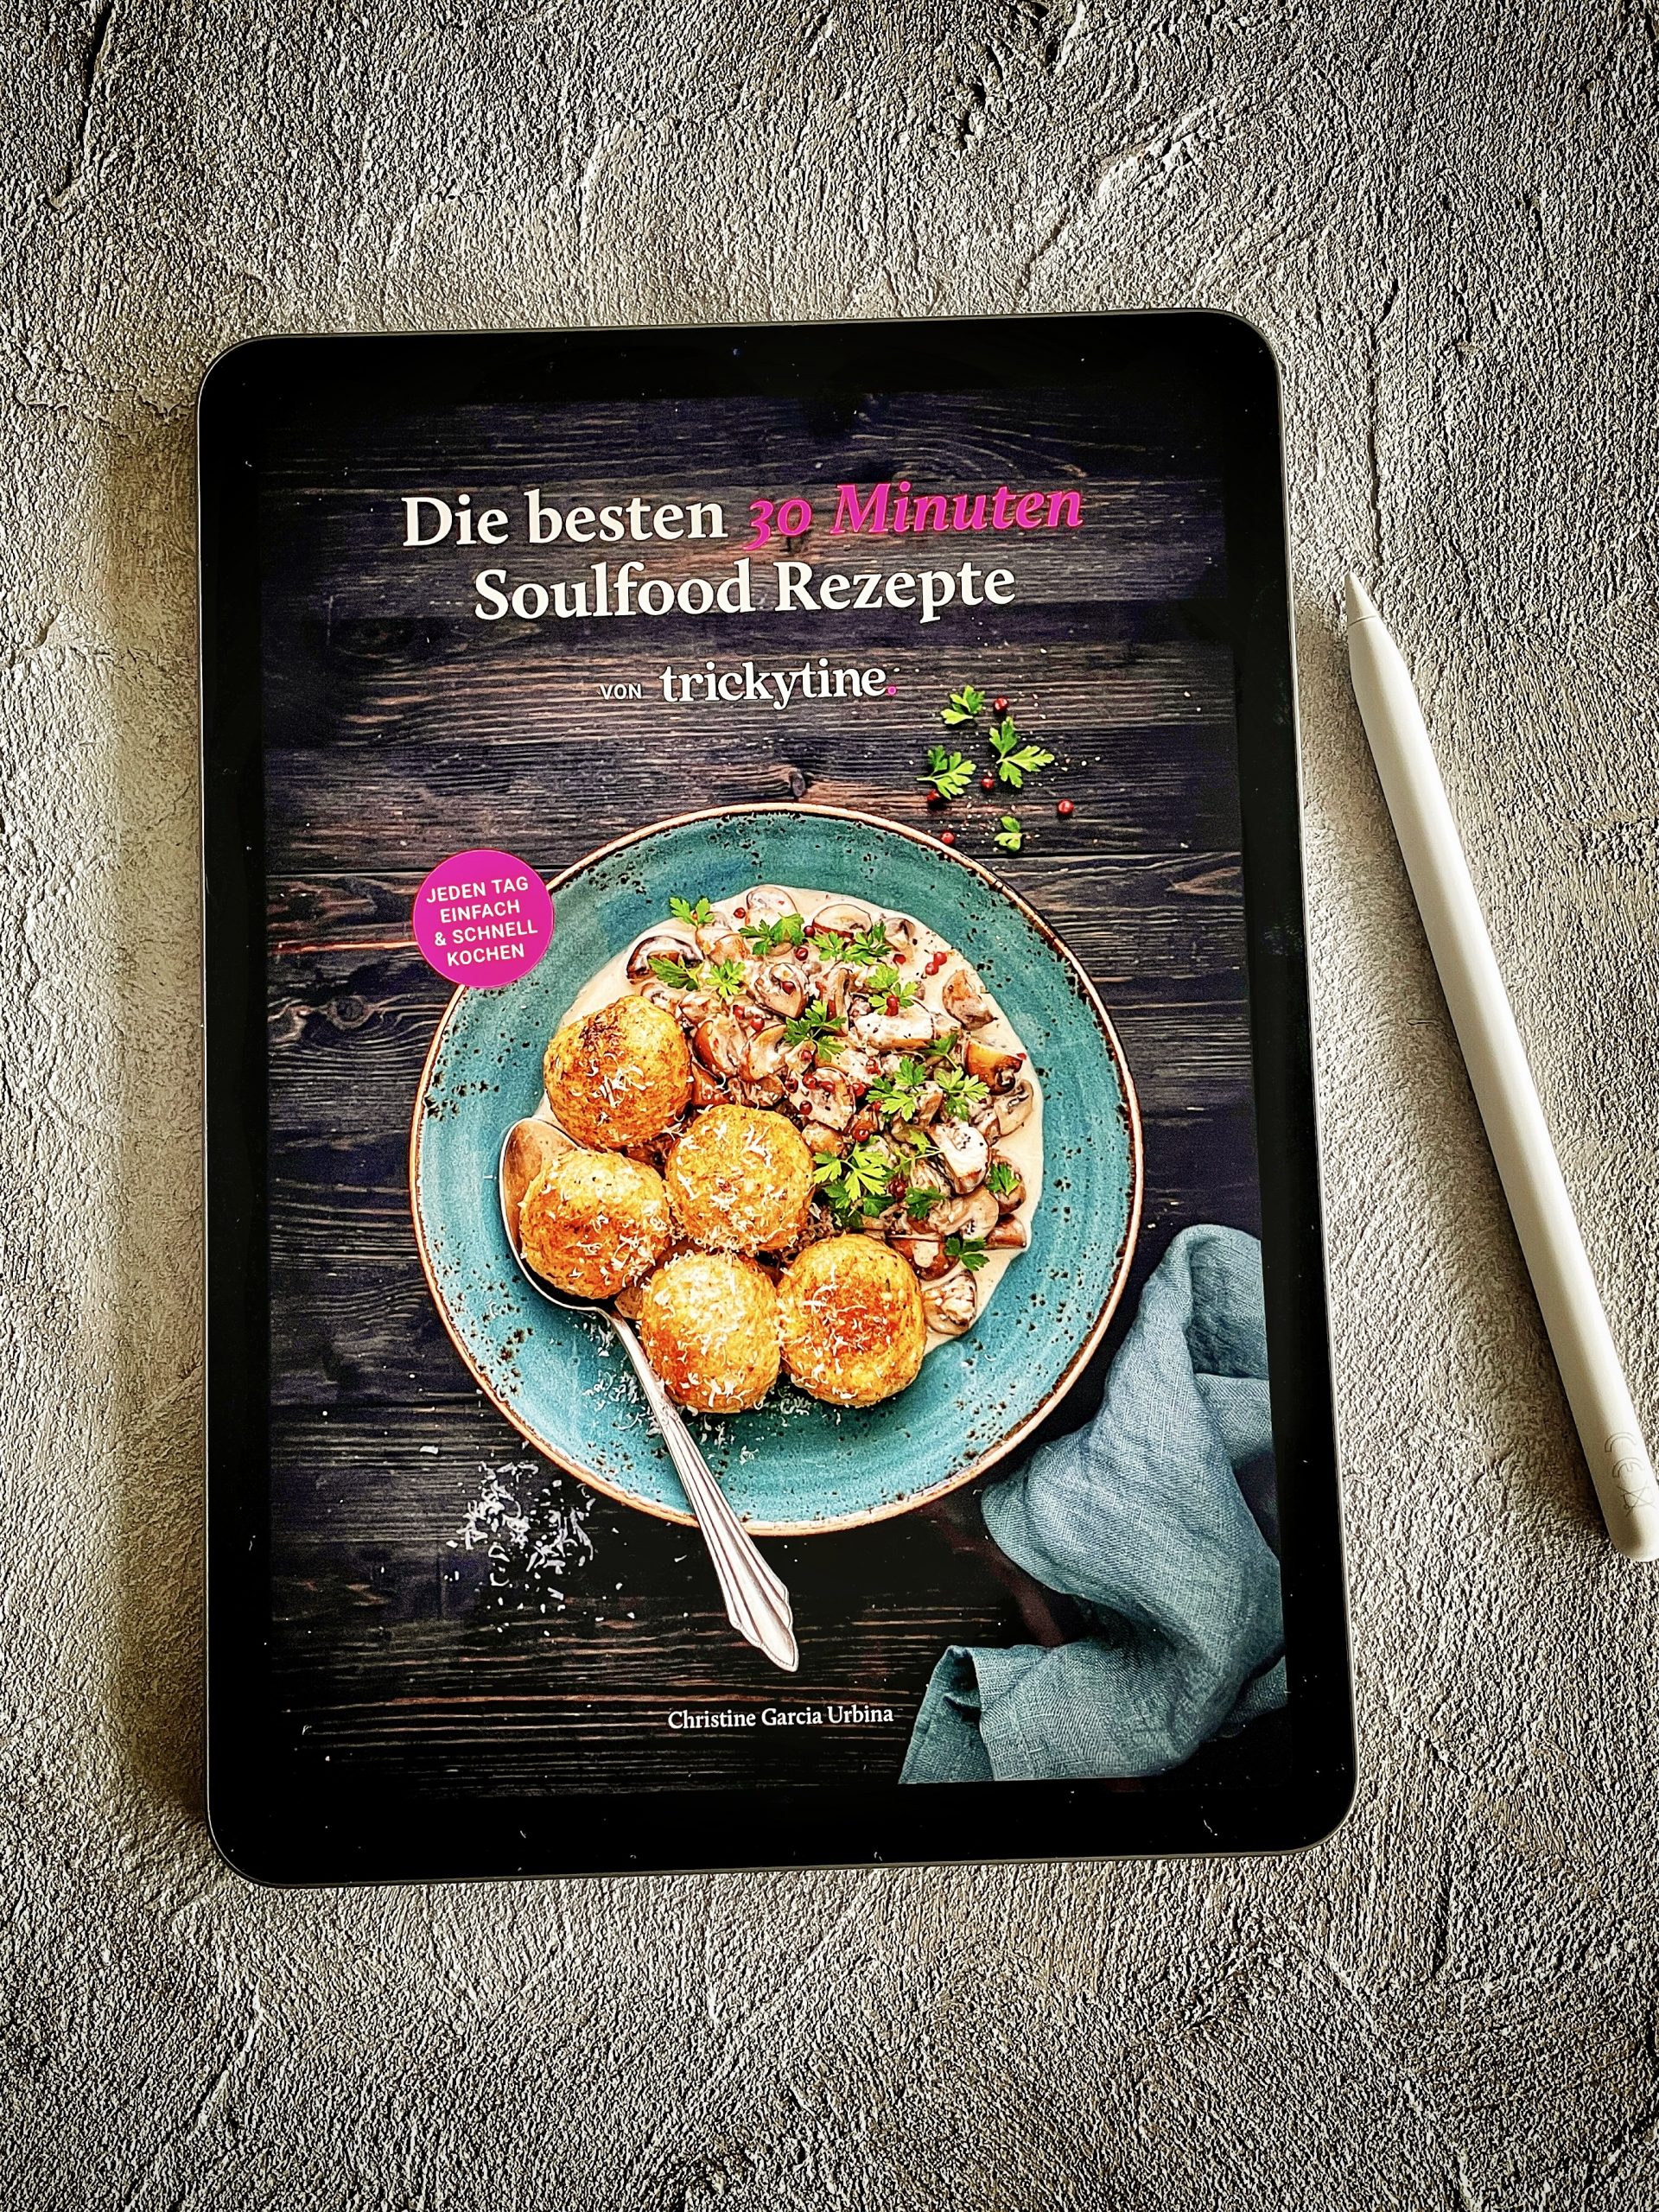 Die besten 30 Minuten Soulfood Rezepte